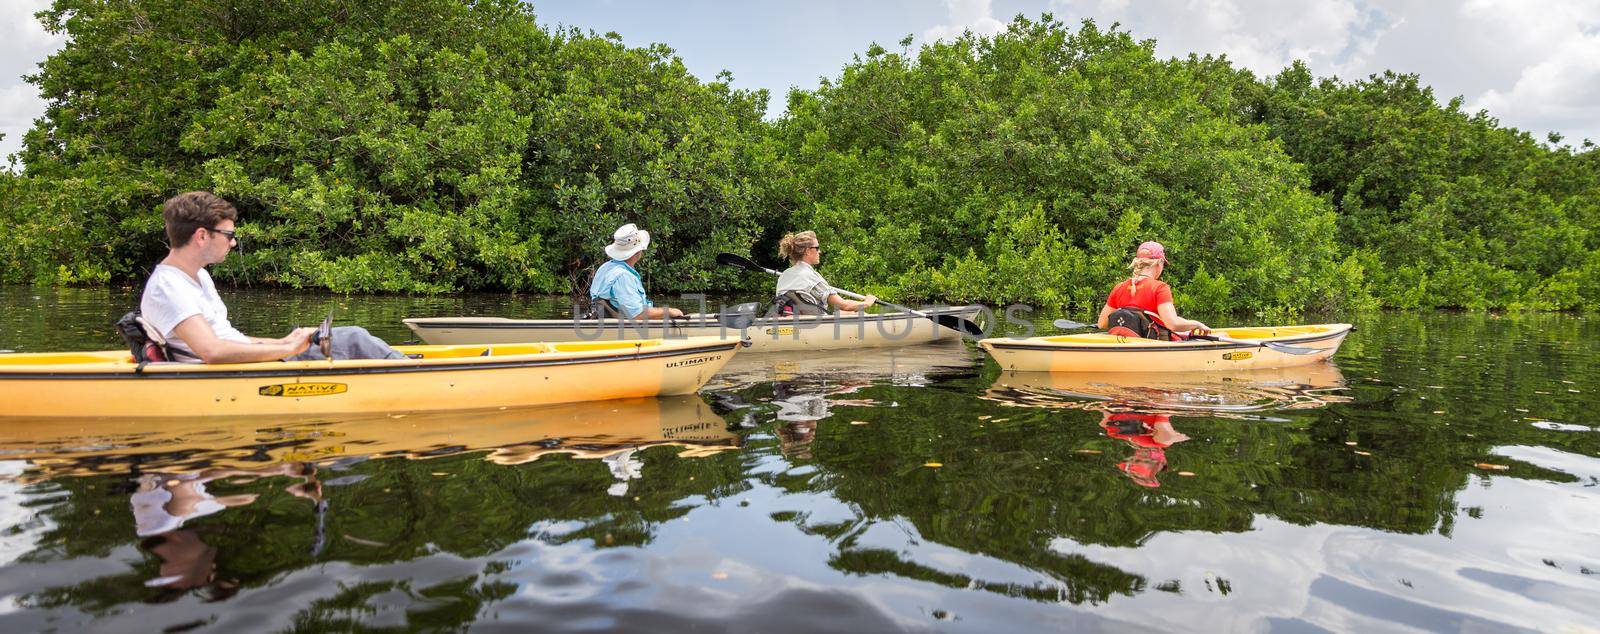 EVERGLADES, FLORIDA, USA - AUGUST 31: Tourists kayaking on August 31, 2014 in Everglades, Florida, USA. by Mariakray